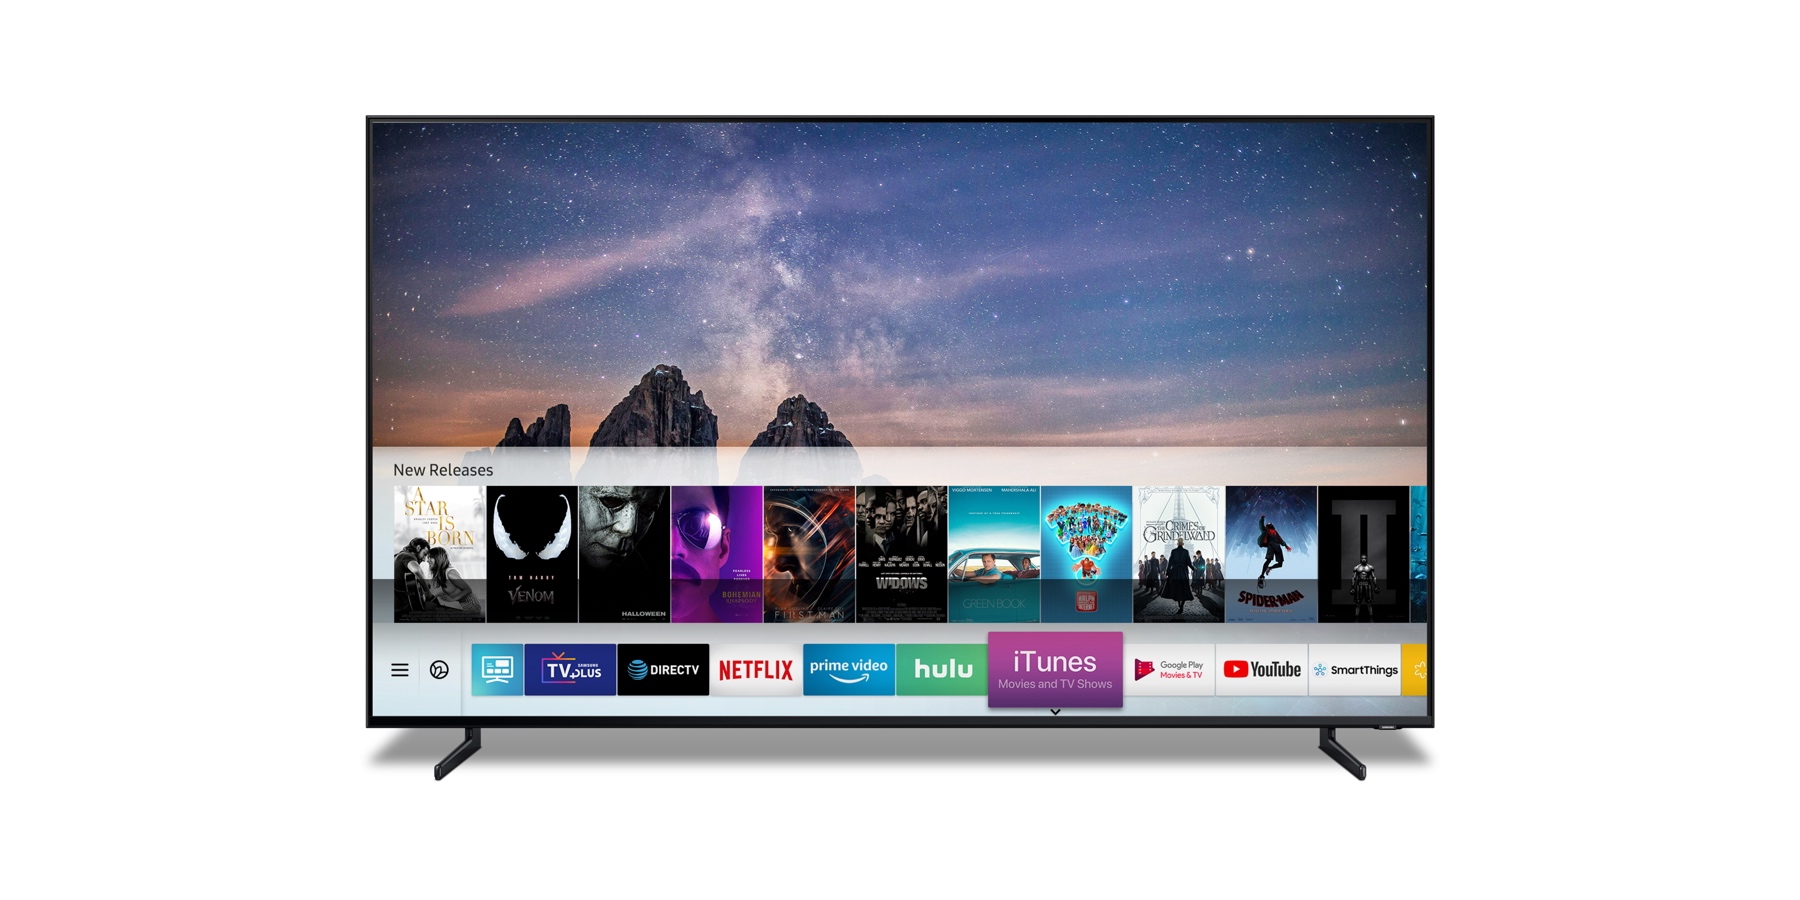 iTunes i AirPlay w TV Samsunga